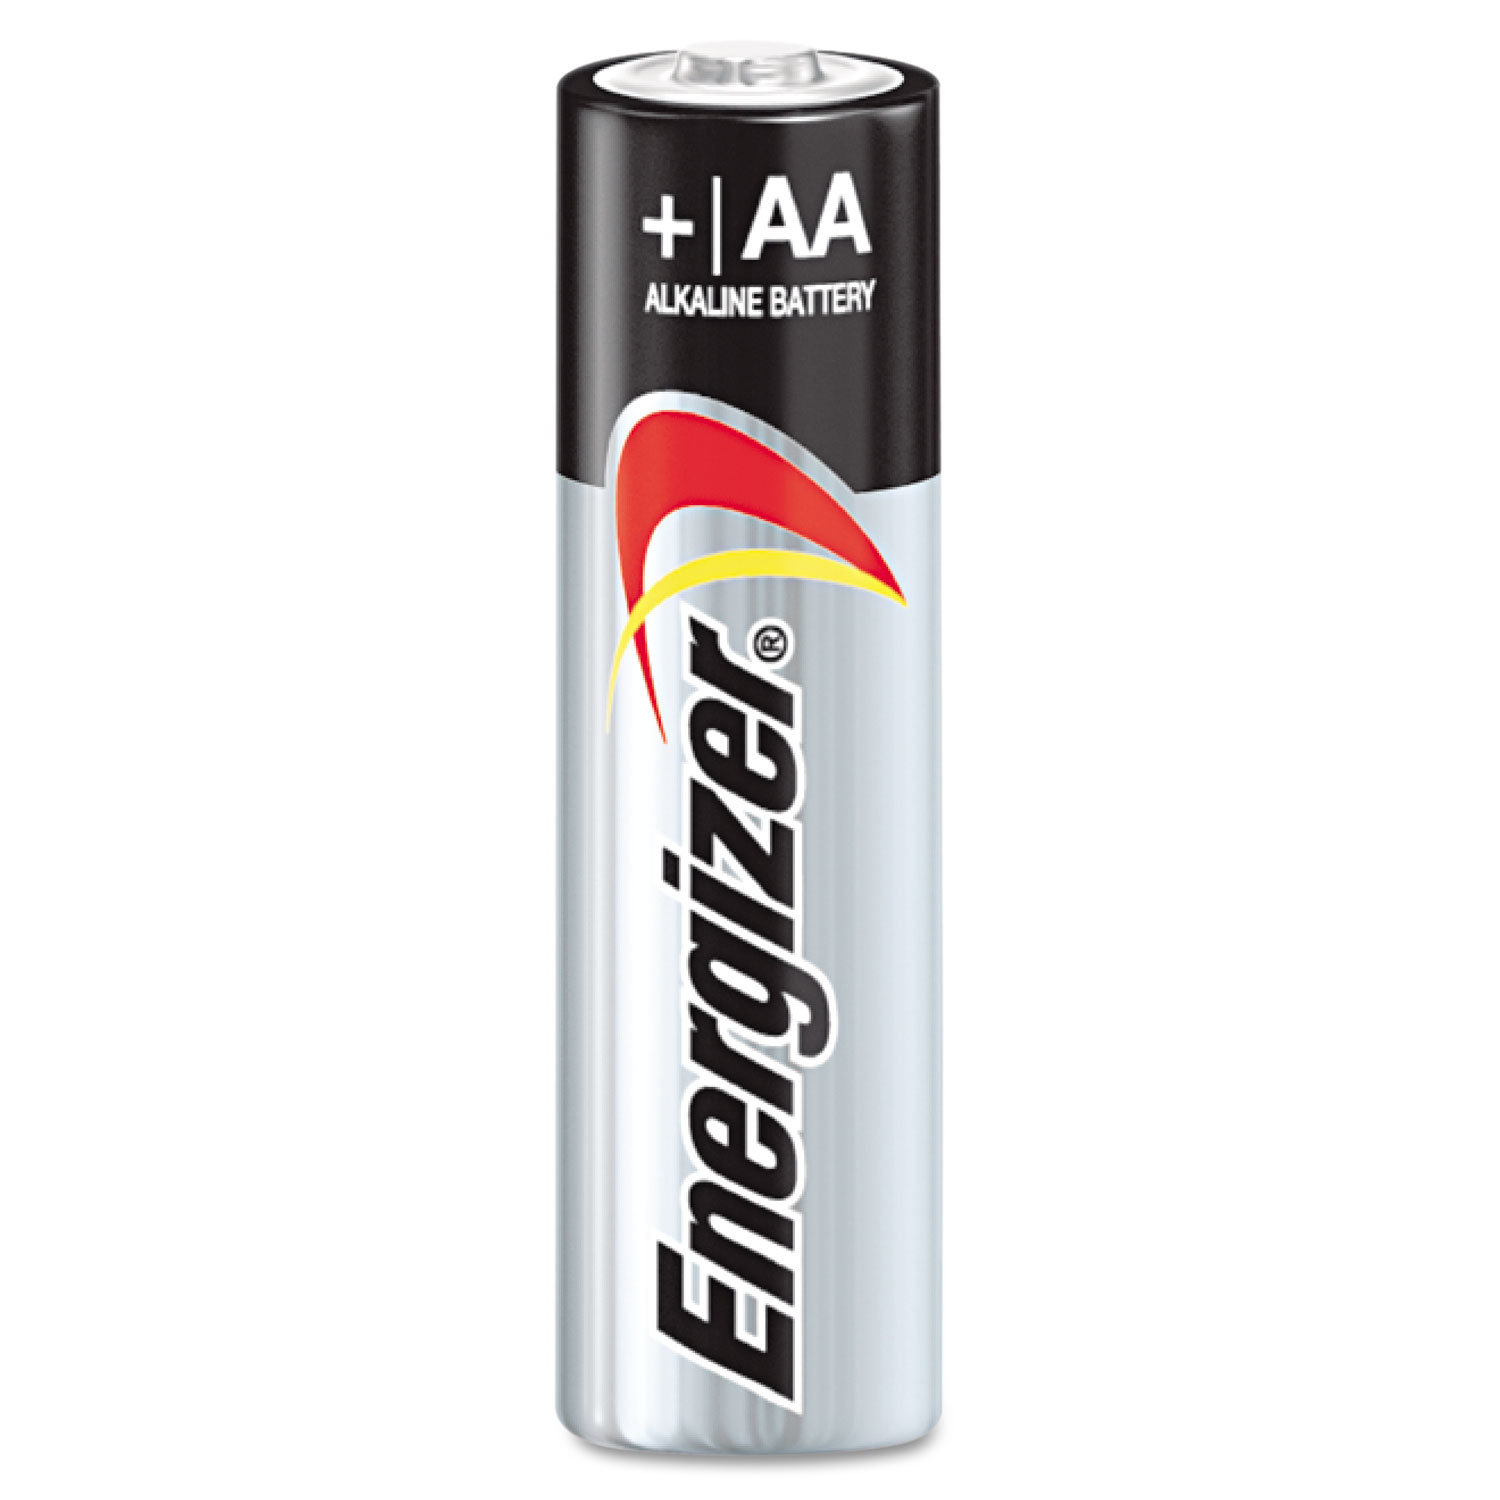 MAX Alkaline Batteries, AA, 36 Batteries/Pack